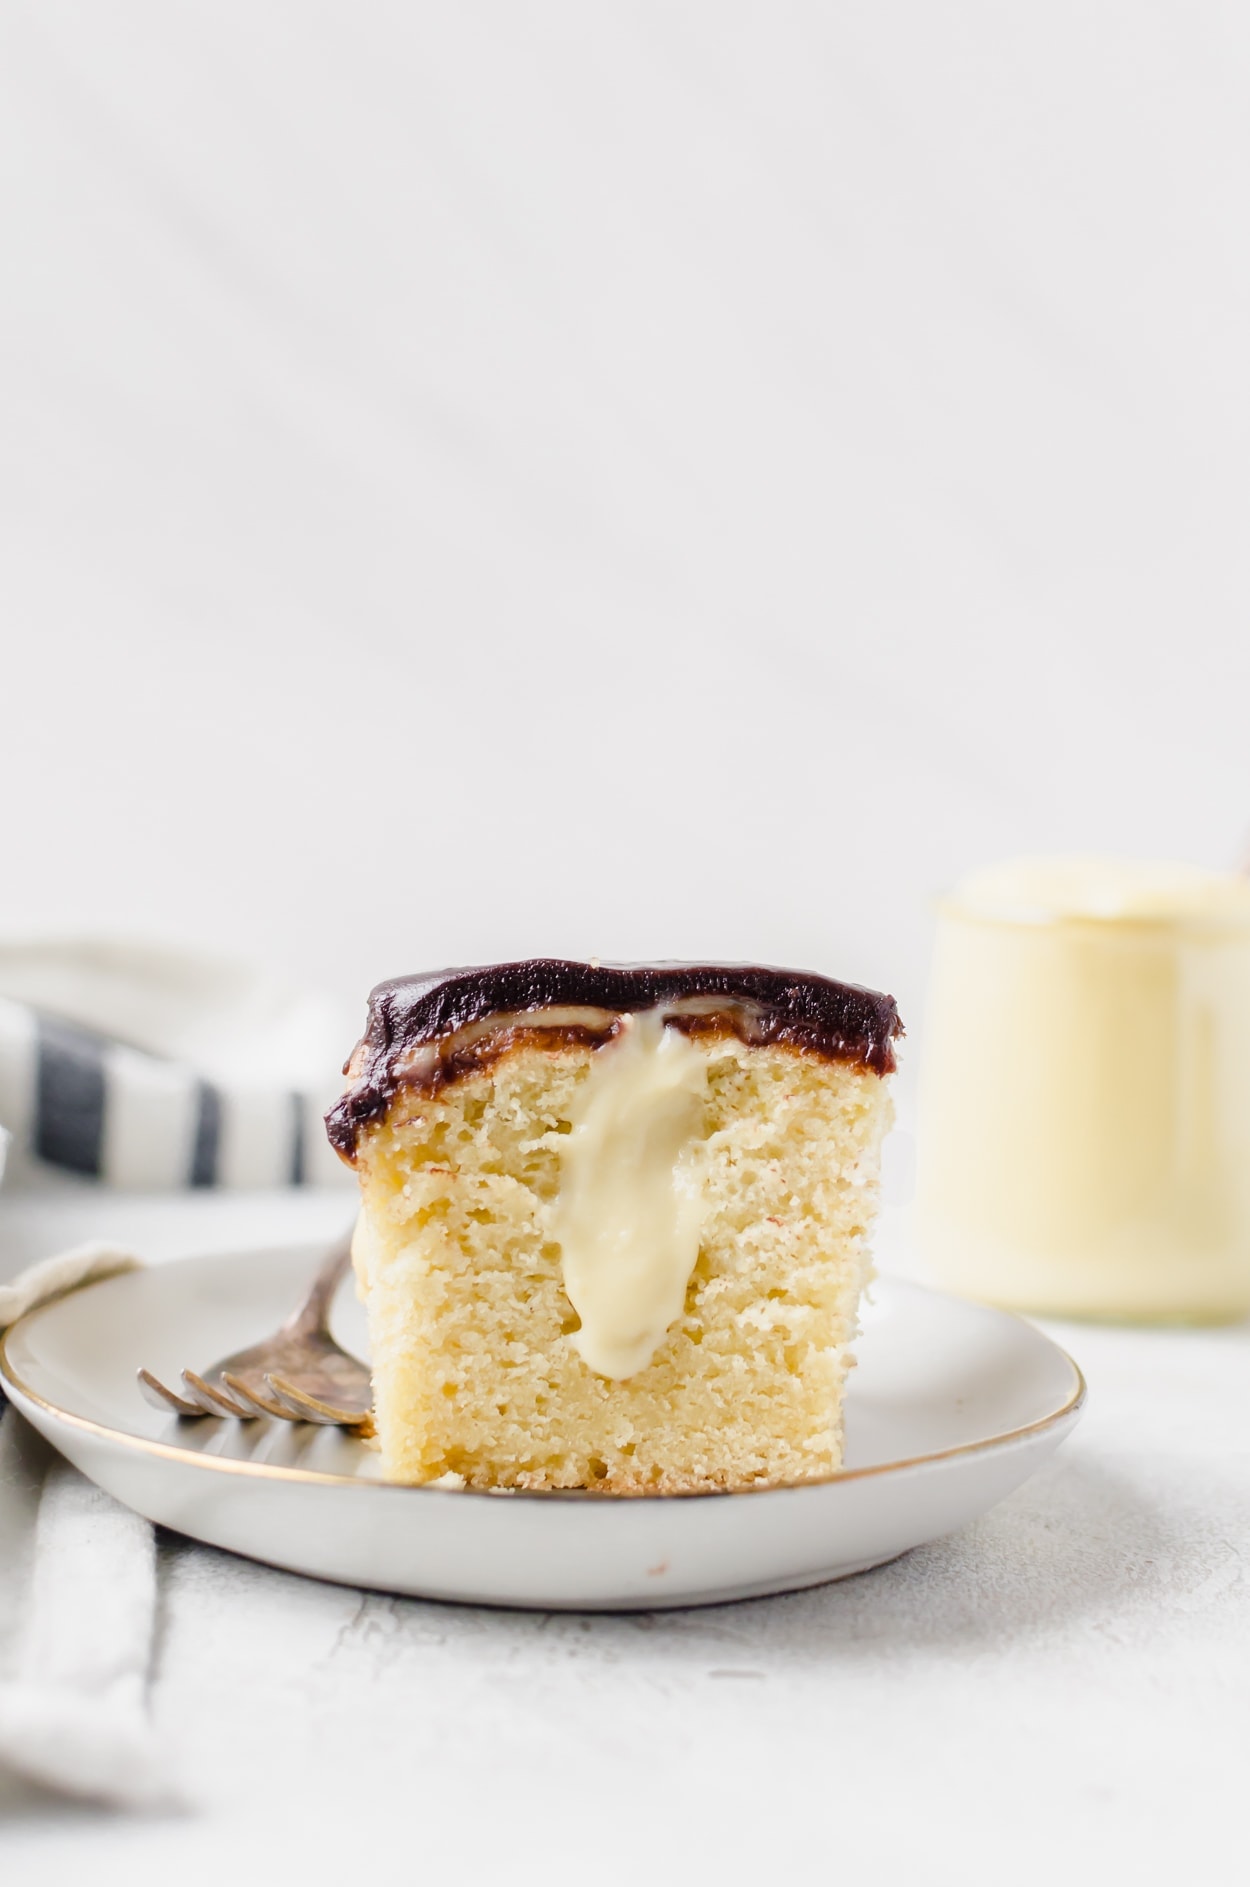 Boston cream pie poke cake. This simple dessert is a family favorite